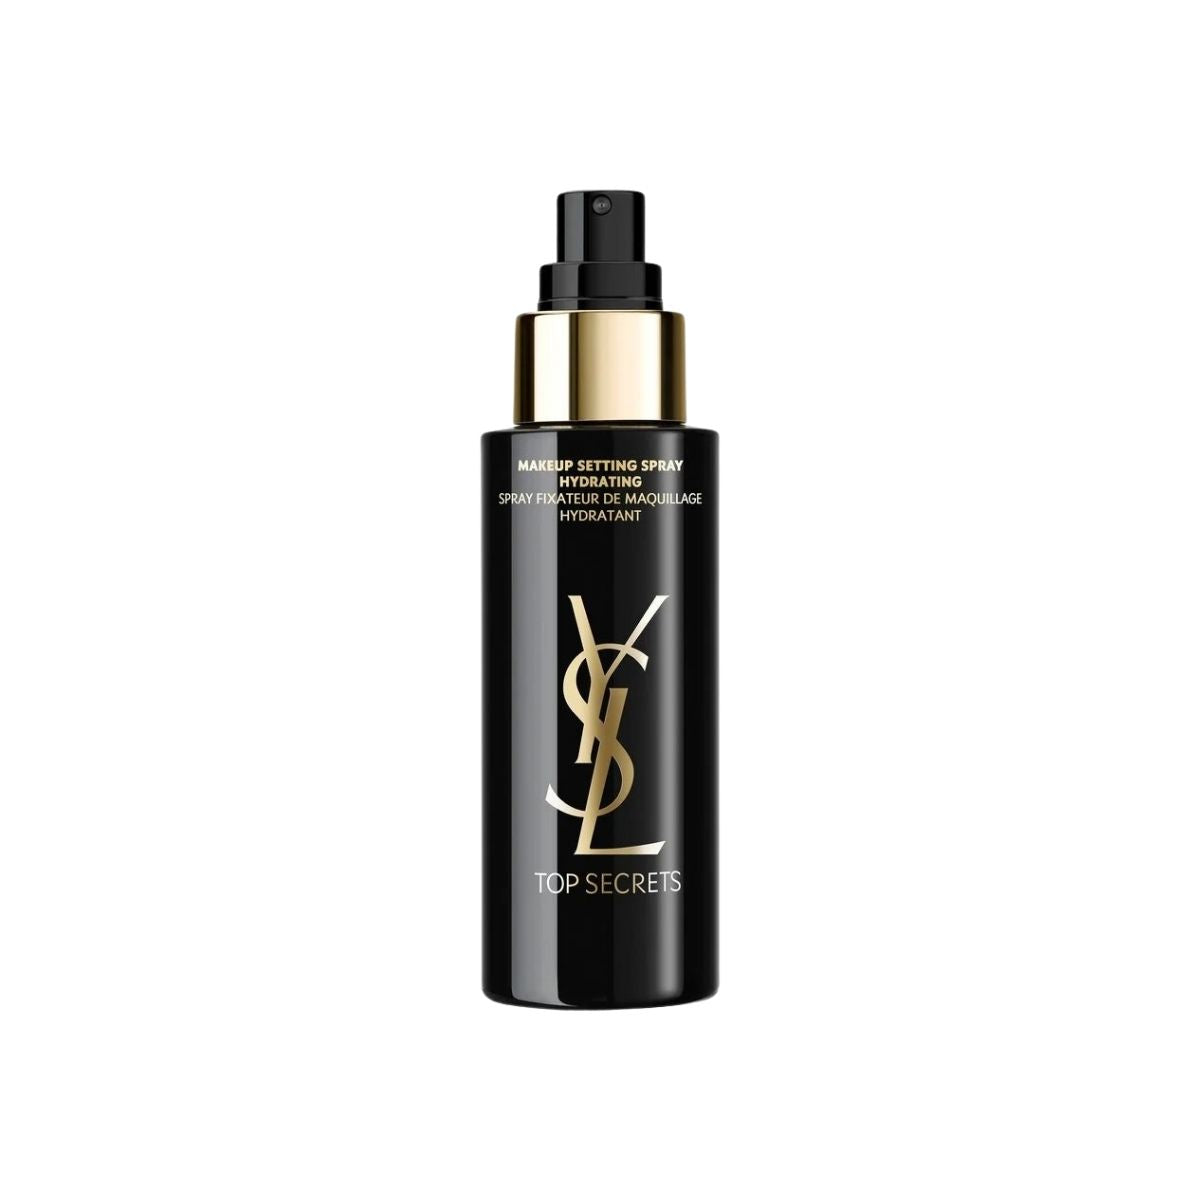 YSL Top Secrets Makeup Setting Spray 100ml